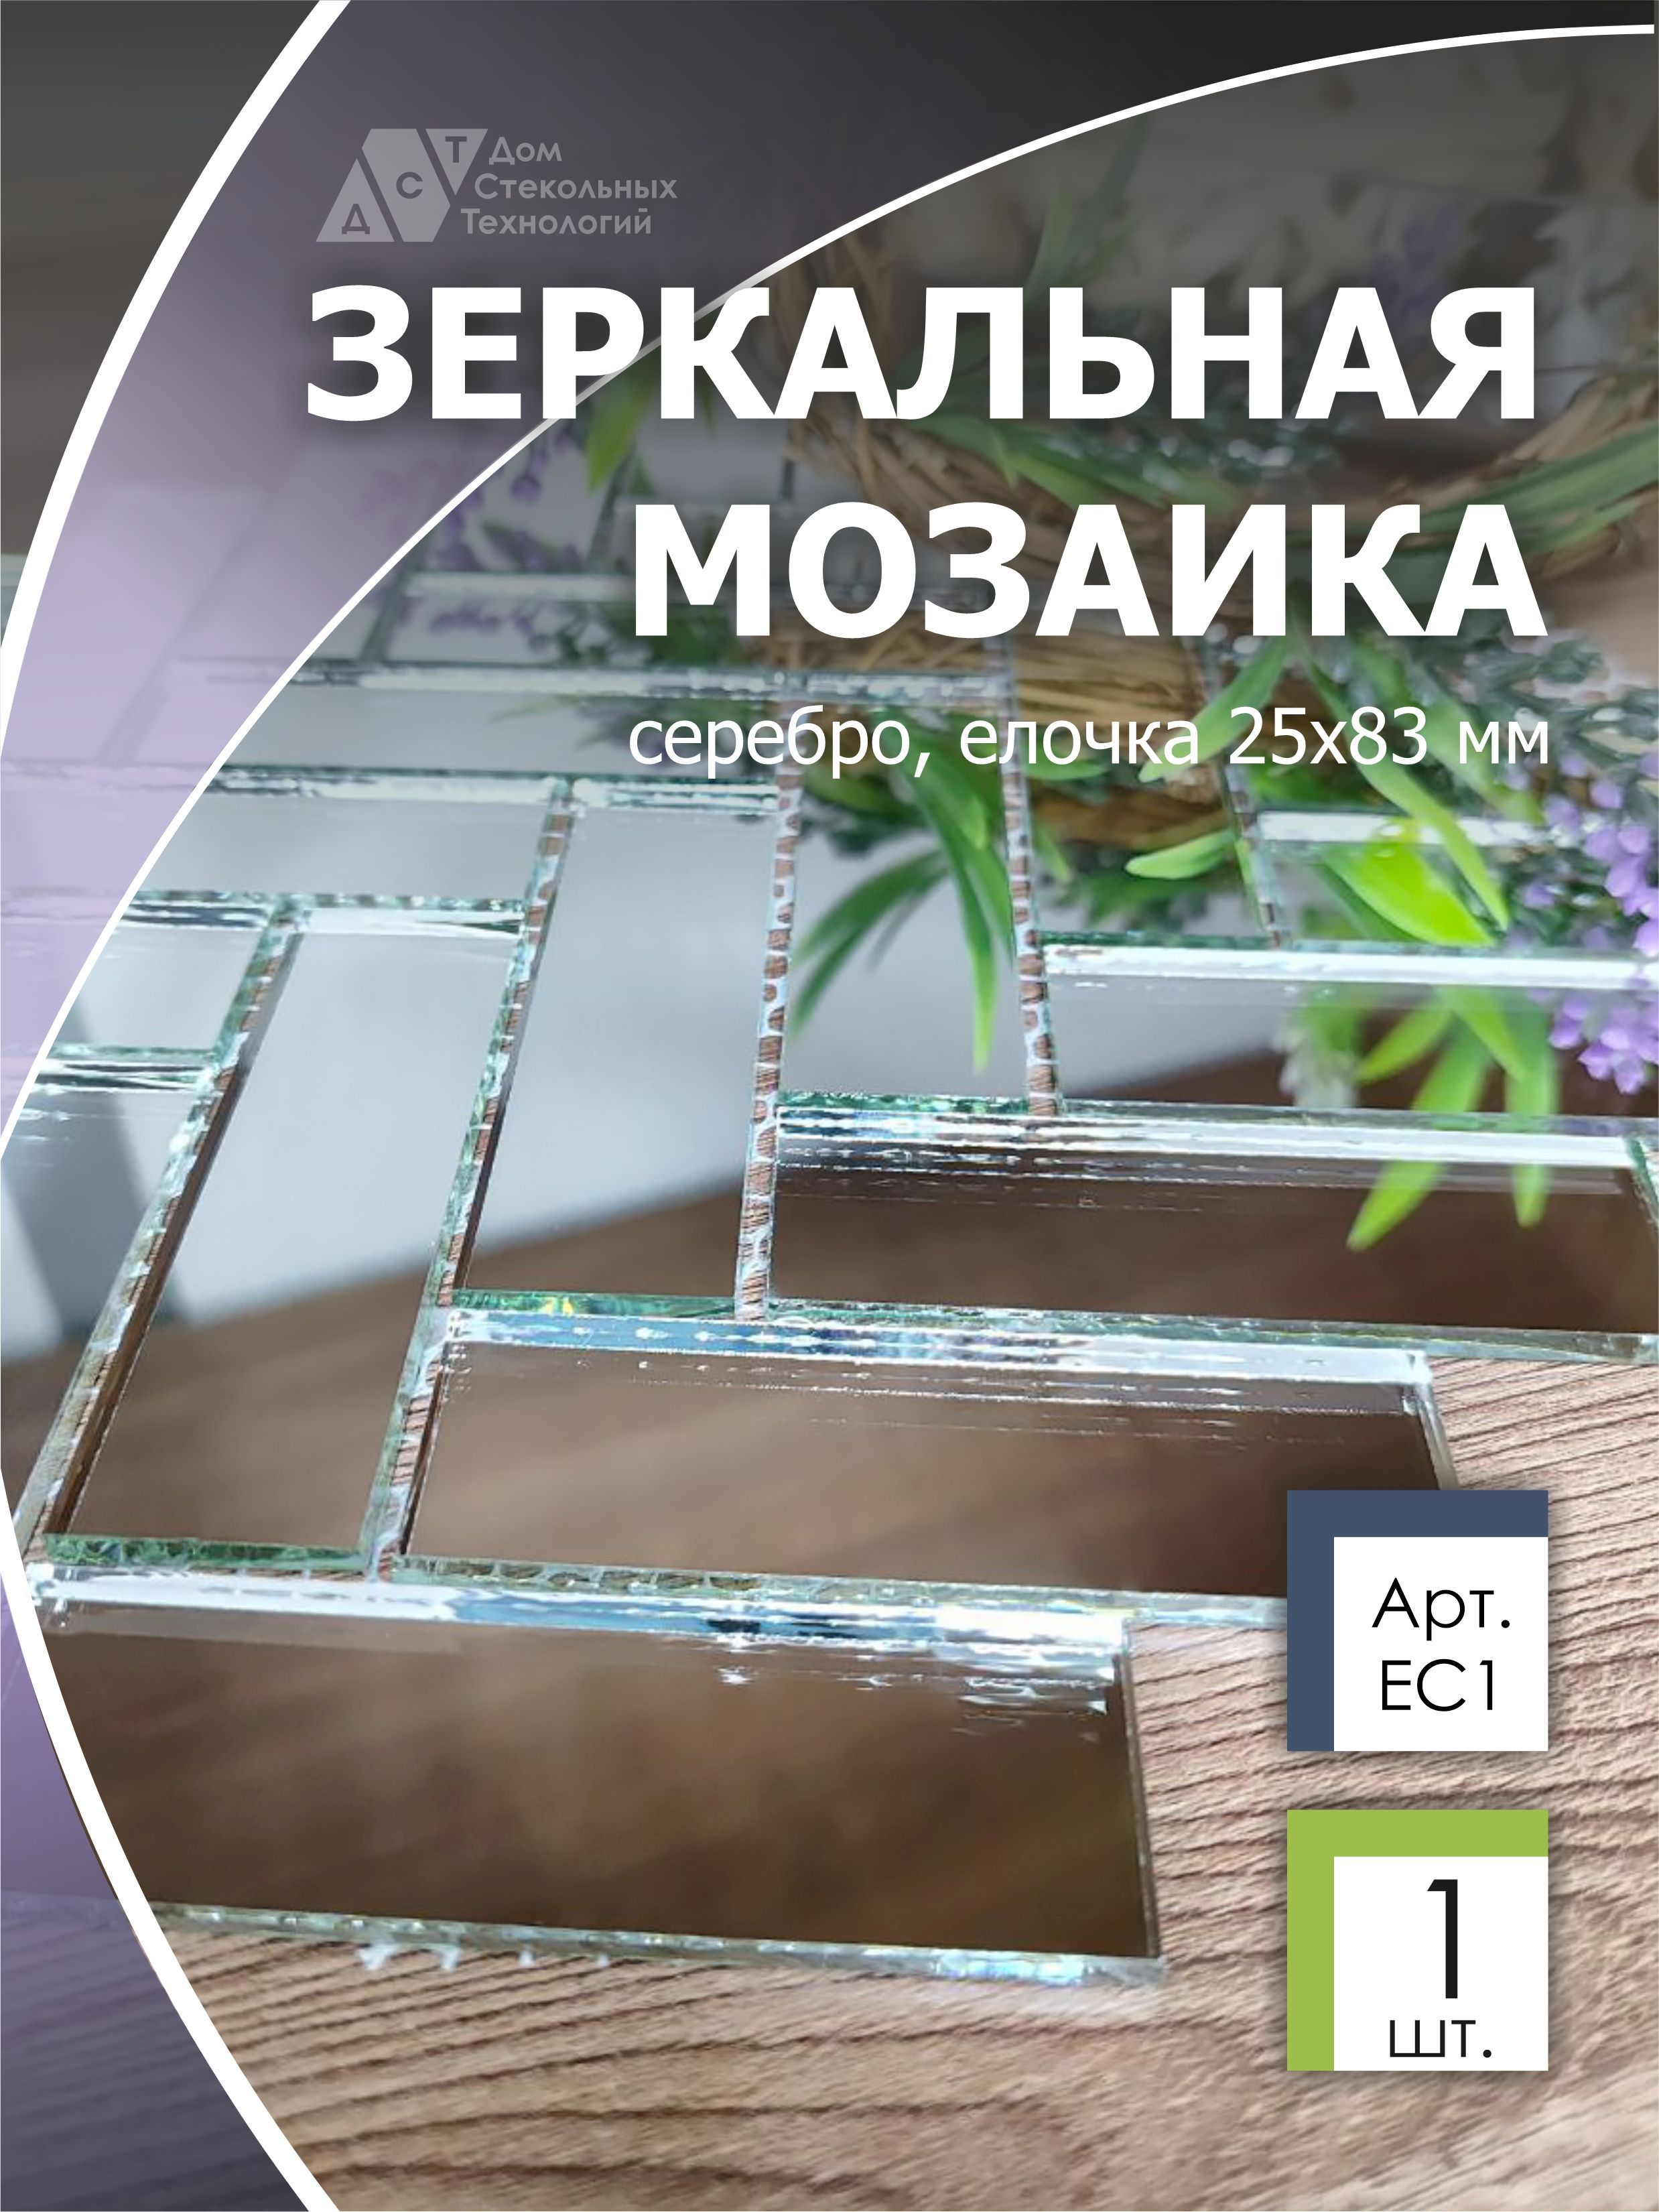 Зеркальная мозаика на сетке елочка, ДСТ, 260х292 мм, прямоугольник серебро, (1 лист) целлюлозные губки для посуды paclan